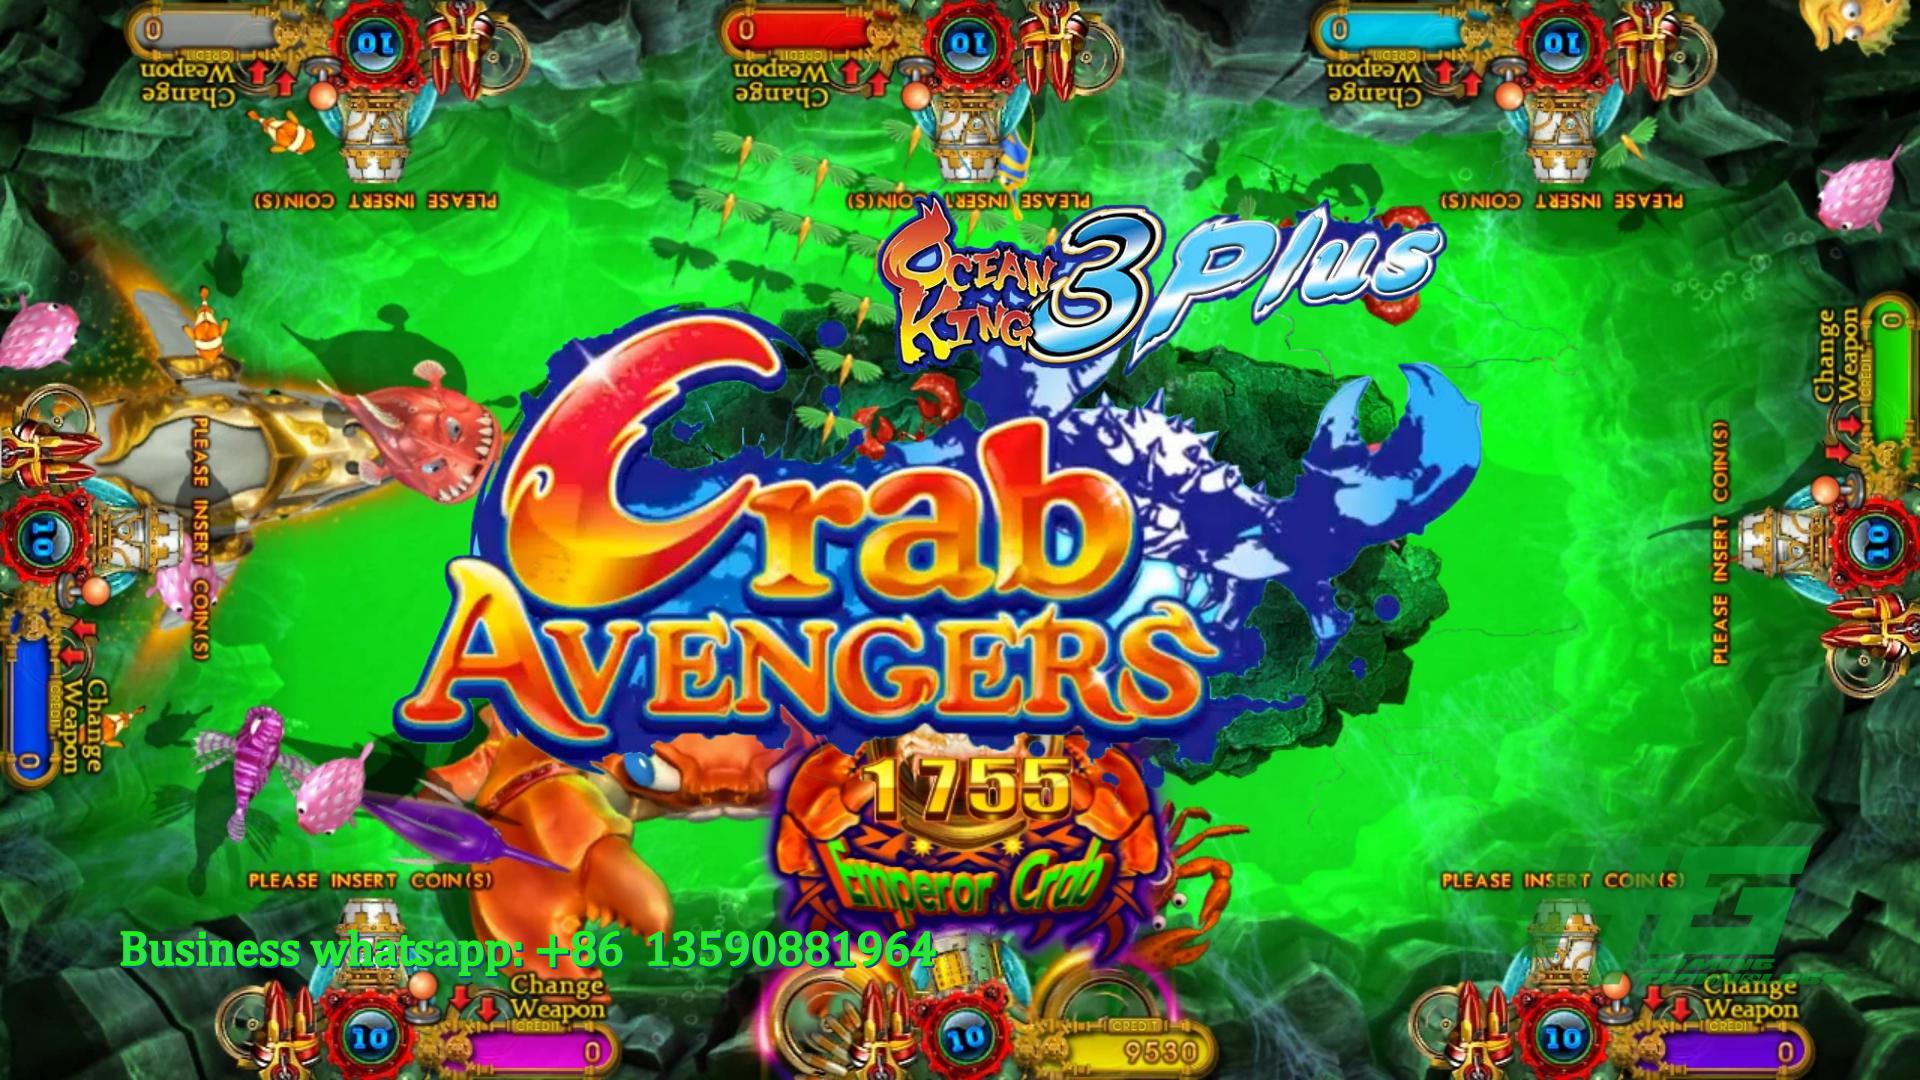 IGS Original Ocean King 3 Plus Crab Avengers,Ocean King 3 Plus Fish Casino Game Machine For Sale